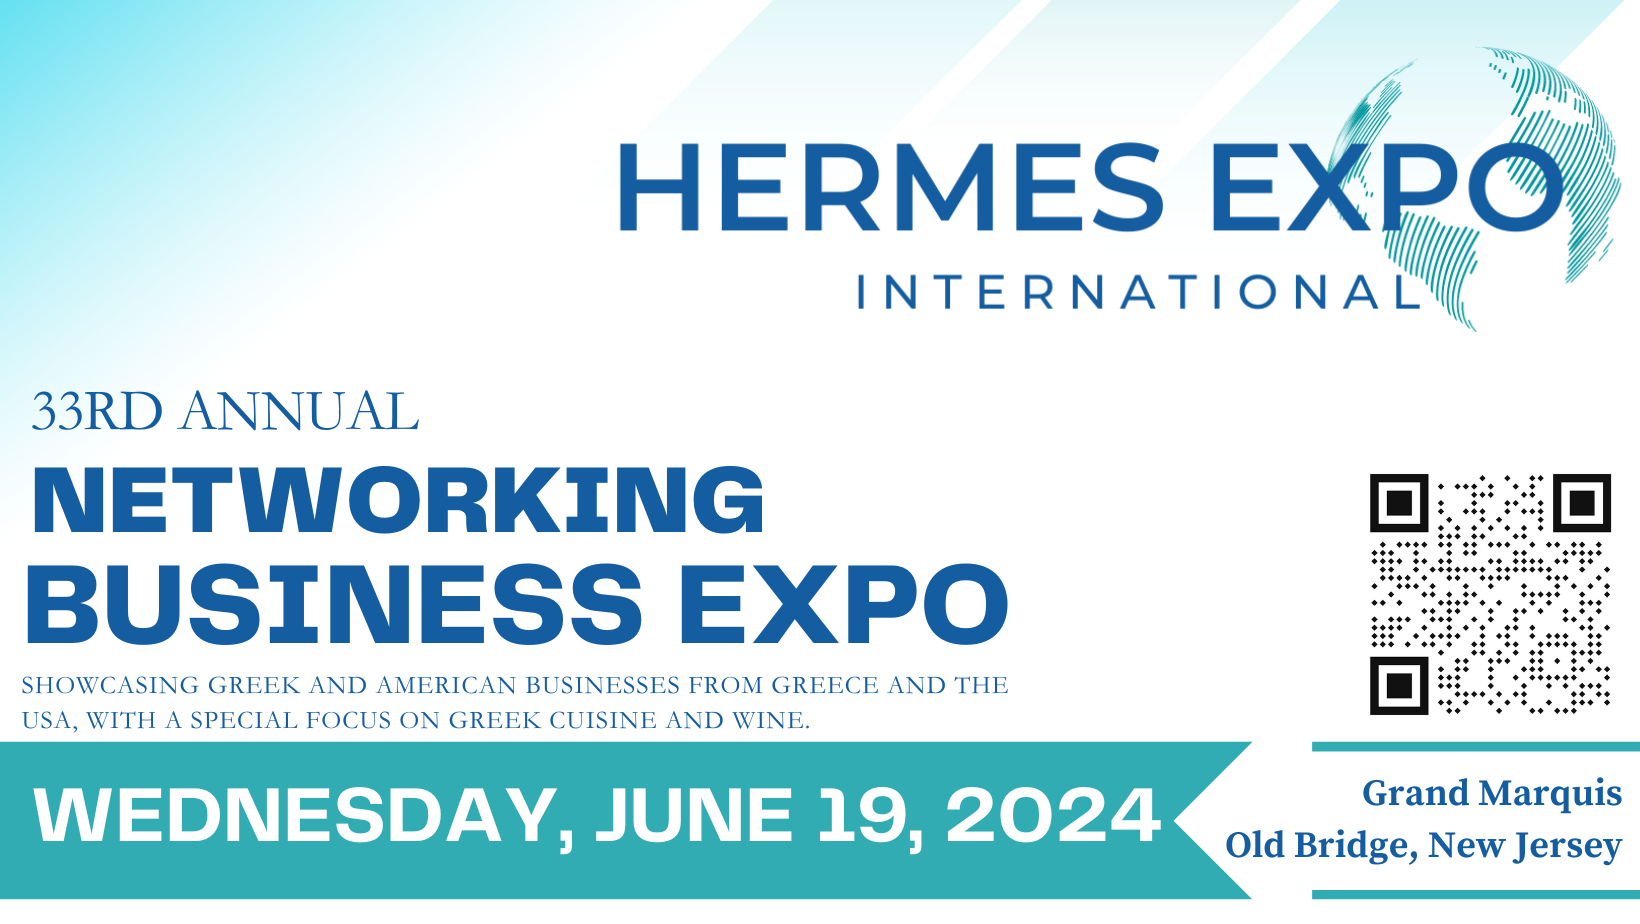 New Jersey: Επιστρέφει για 33η χρονιά η έκθεση Hermes Expo